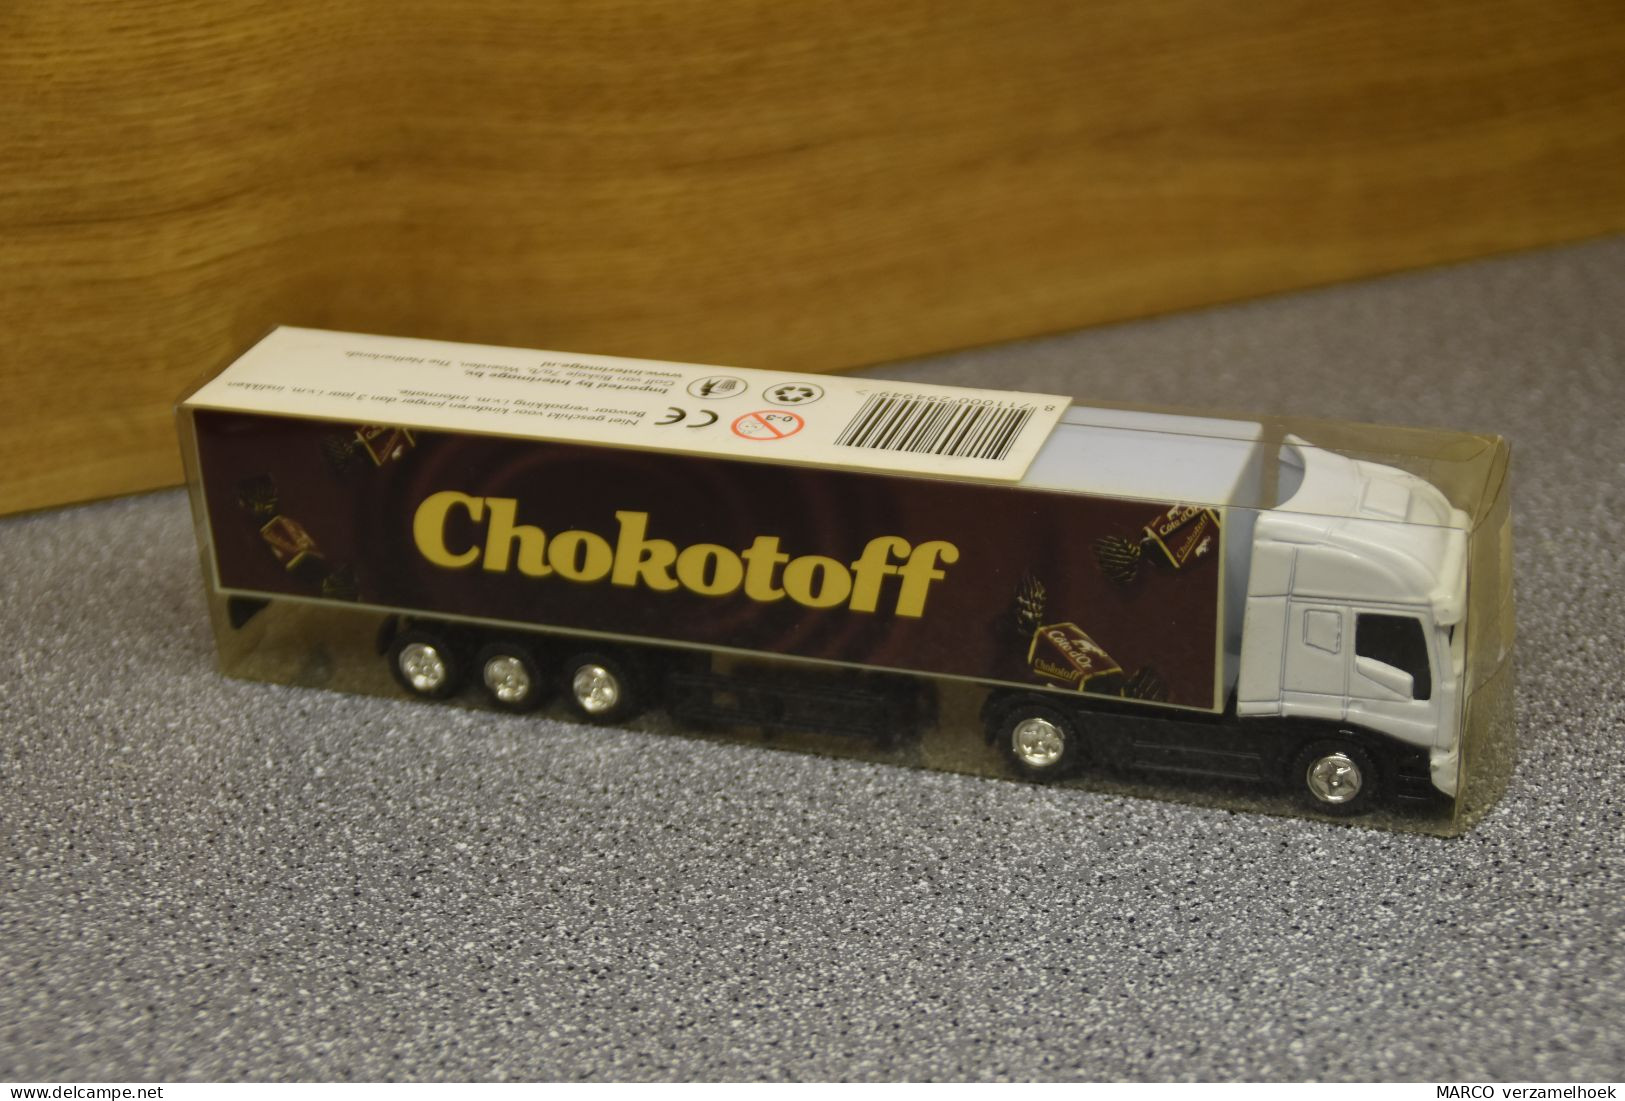 Vrachtwagen-truck Interimage Woerden (NL) Scale 1:87 Chokotoff - Scale 1:87